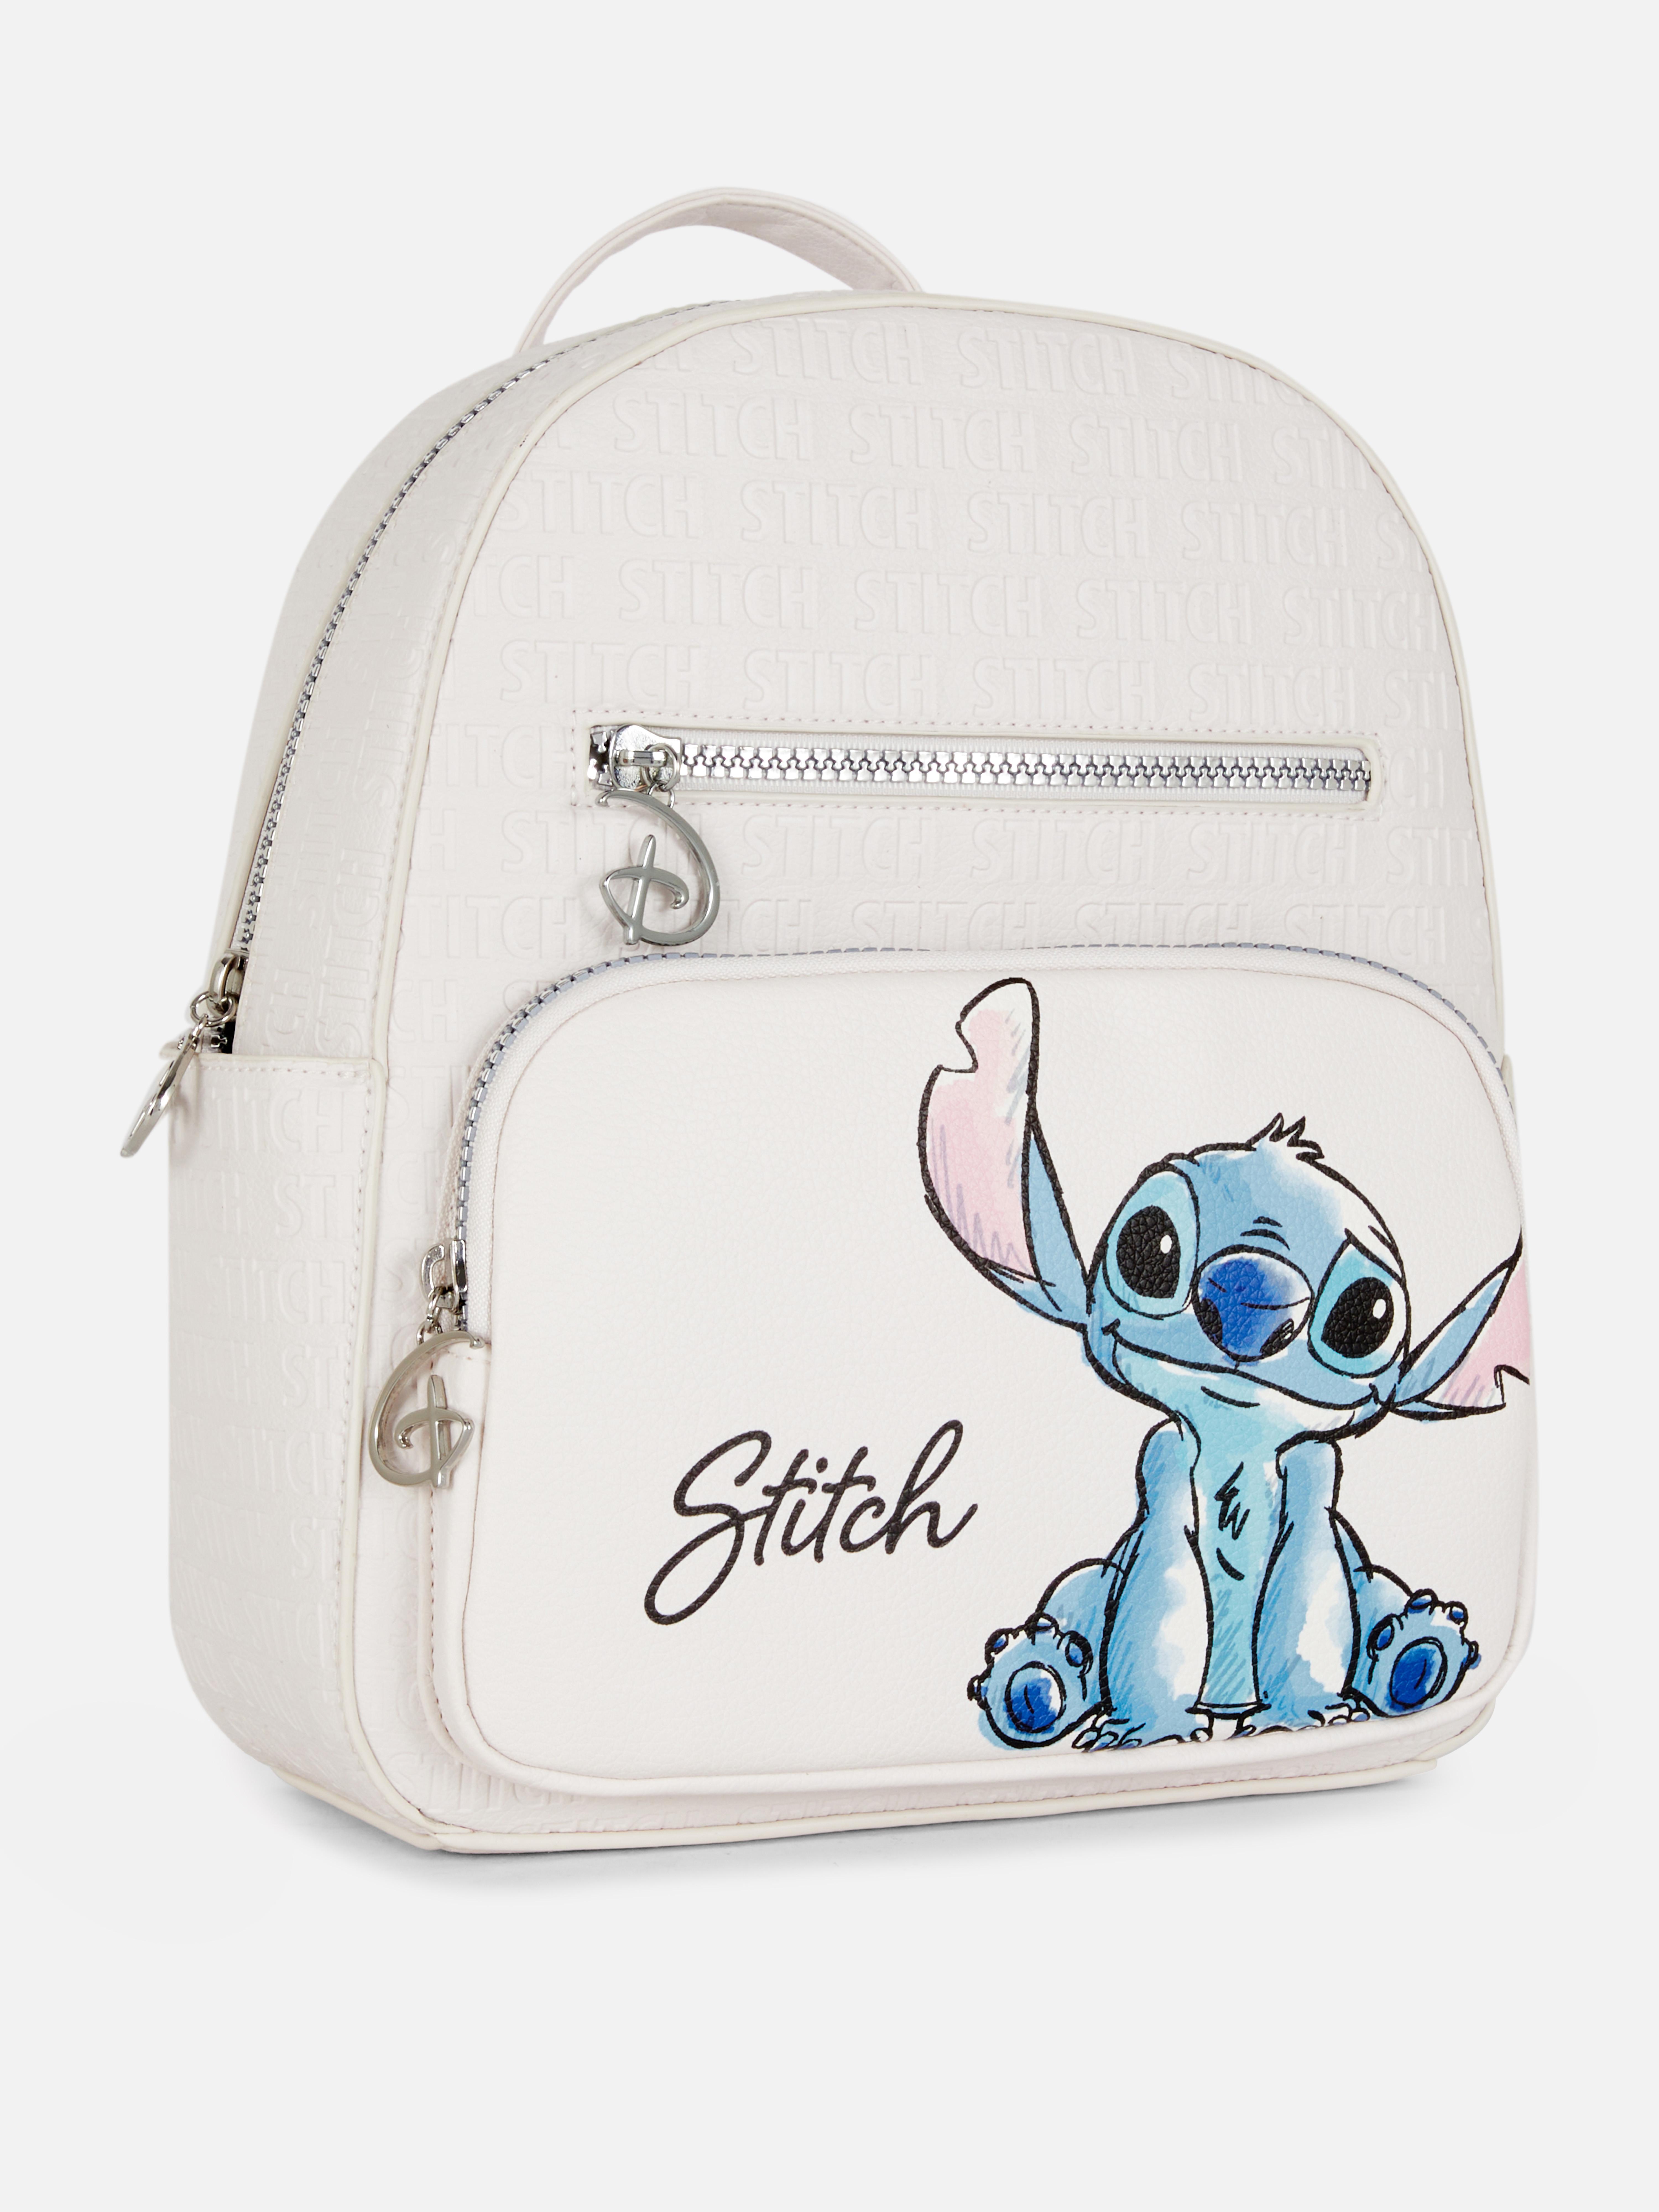 Disneyfind - NEW Stitch backpack from Primark 💙